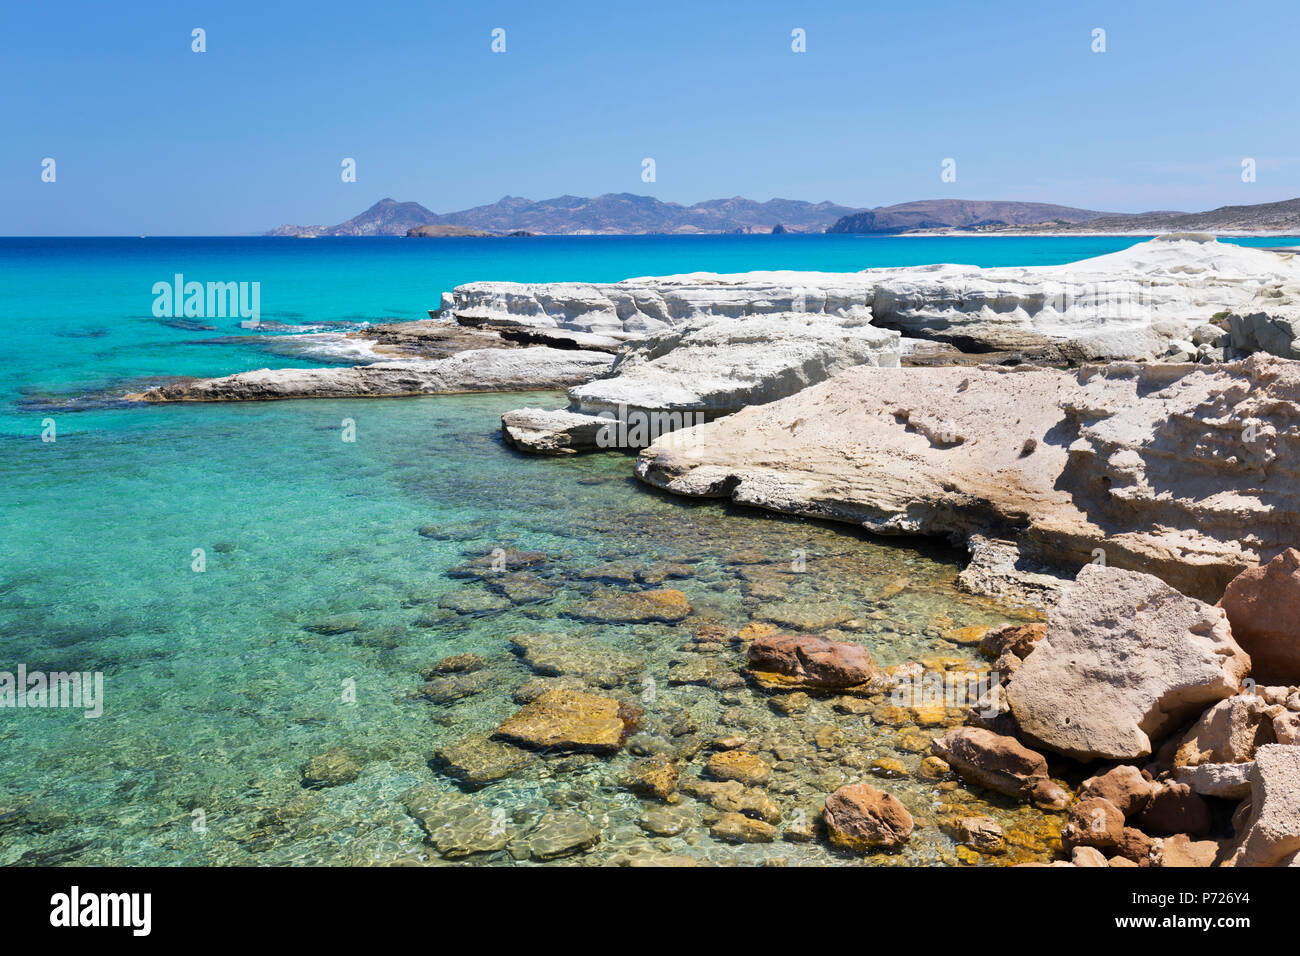 Clear turquoise sea and volcanic rock formations at Sarakiniko, Sarakiniko, Milos, Cyclades, Aegean Sea, Greek Islands, Greece, Europe Stock Photo